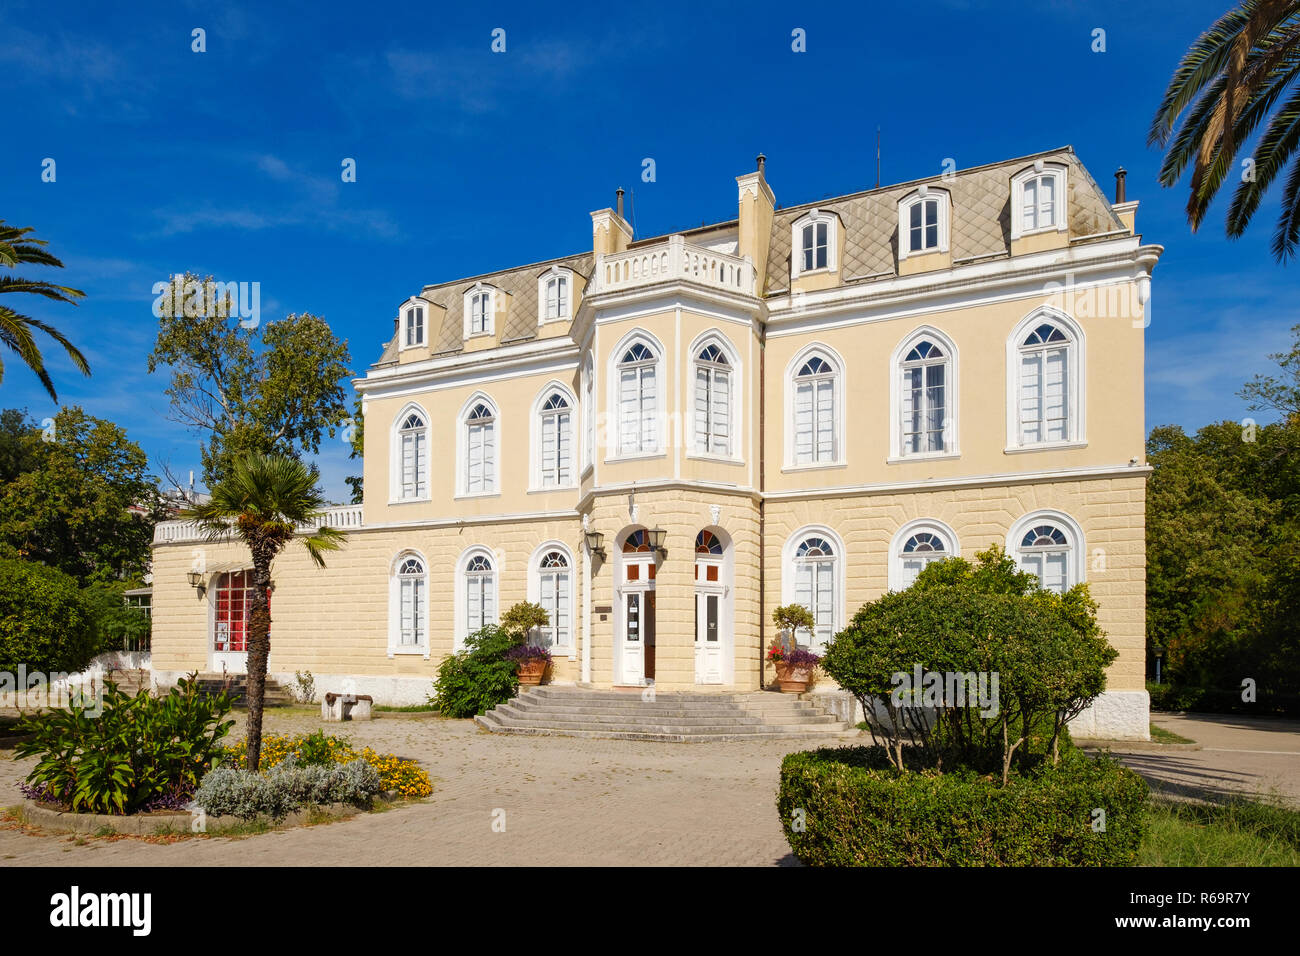 Sommerresidenz, Palast von König Nikola, City Bar, Adria, Montenegro Stockfoto